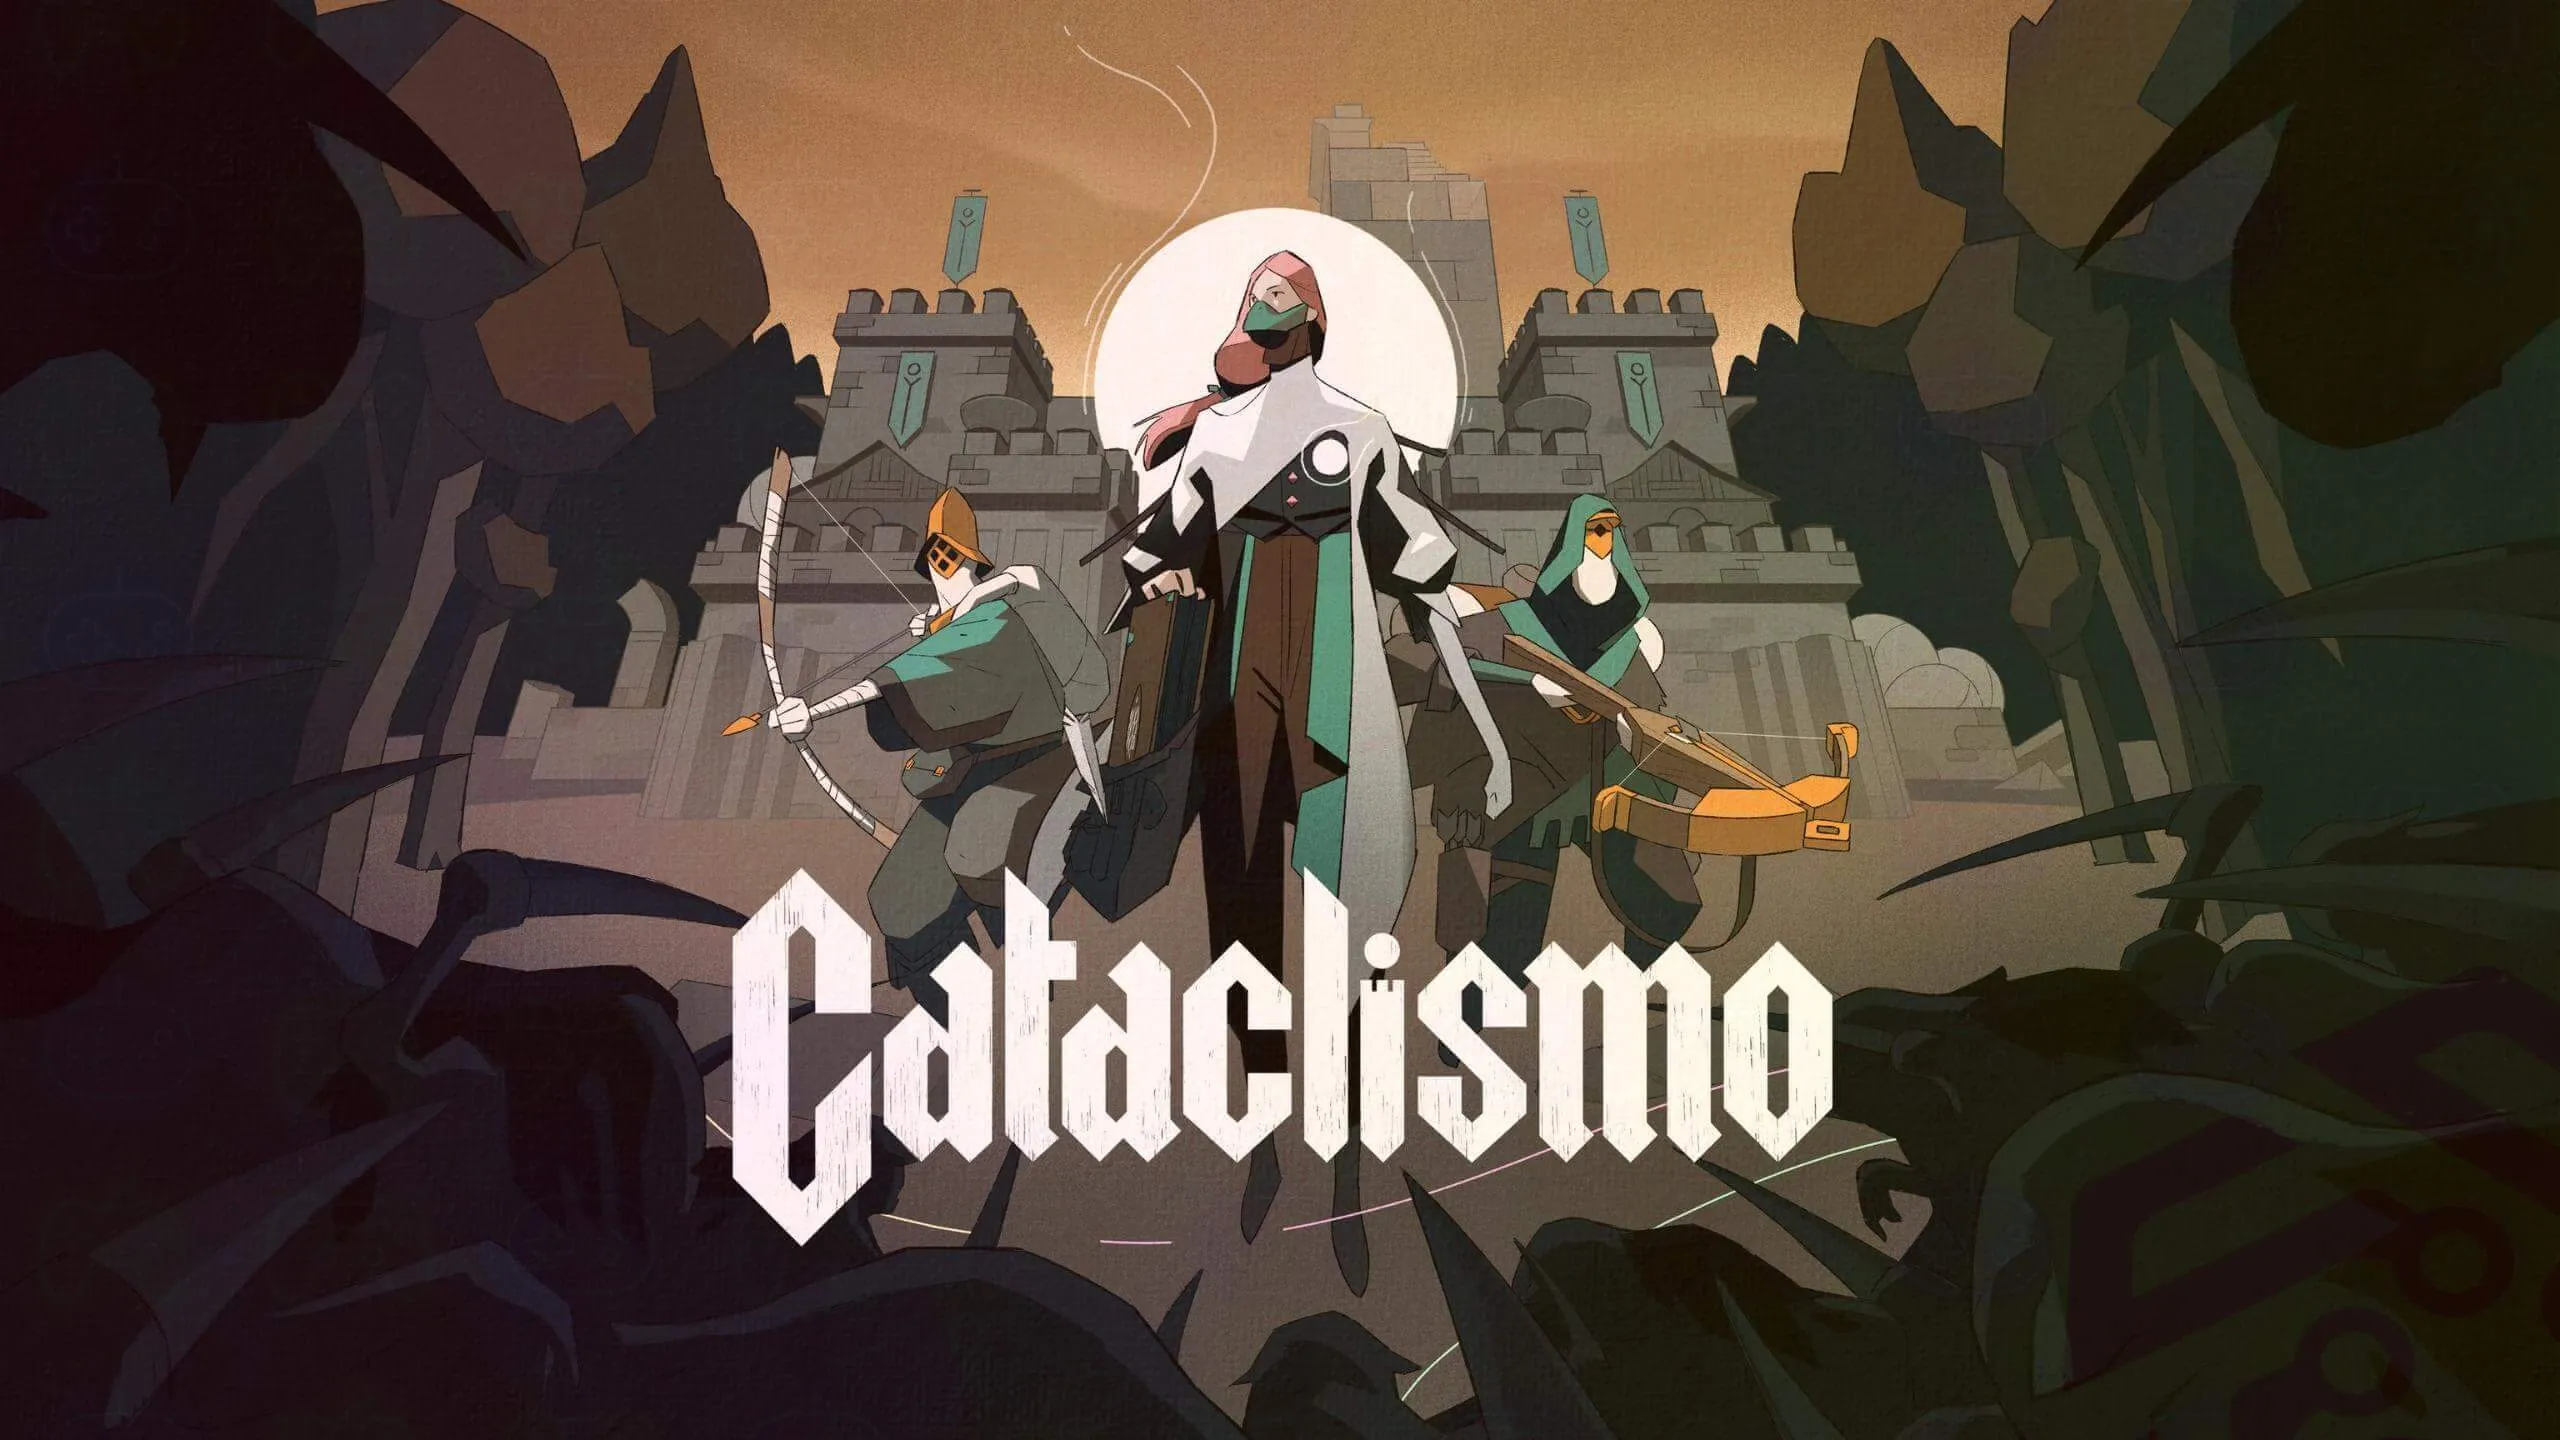 Cataclismo 2 key art teaser